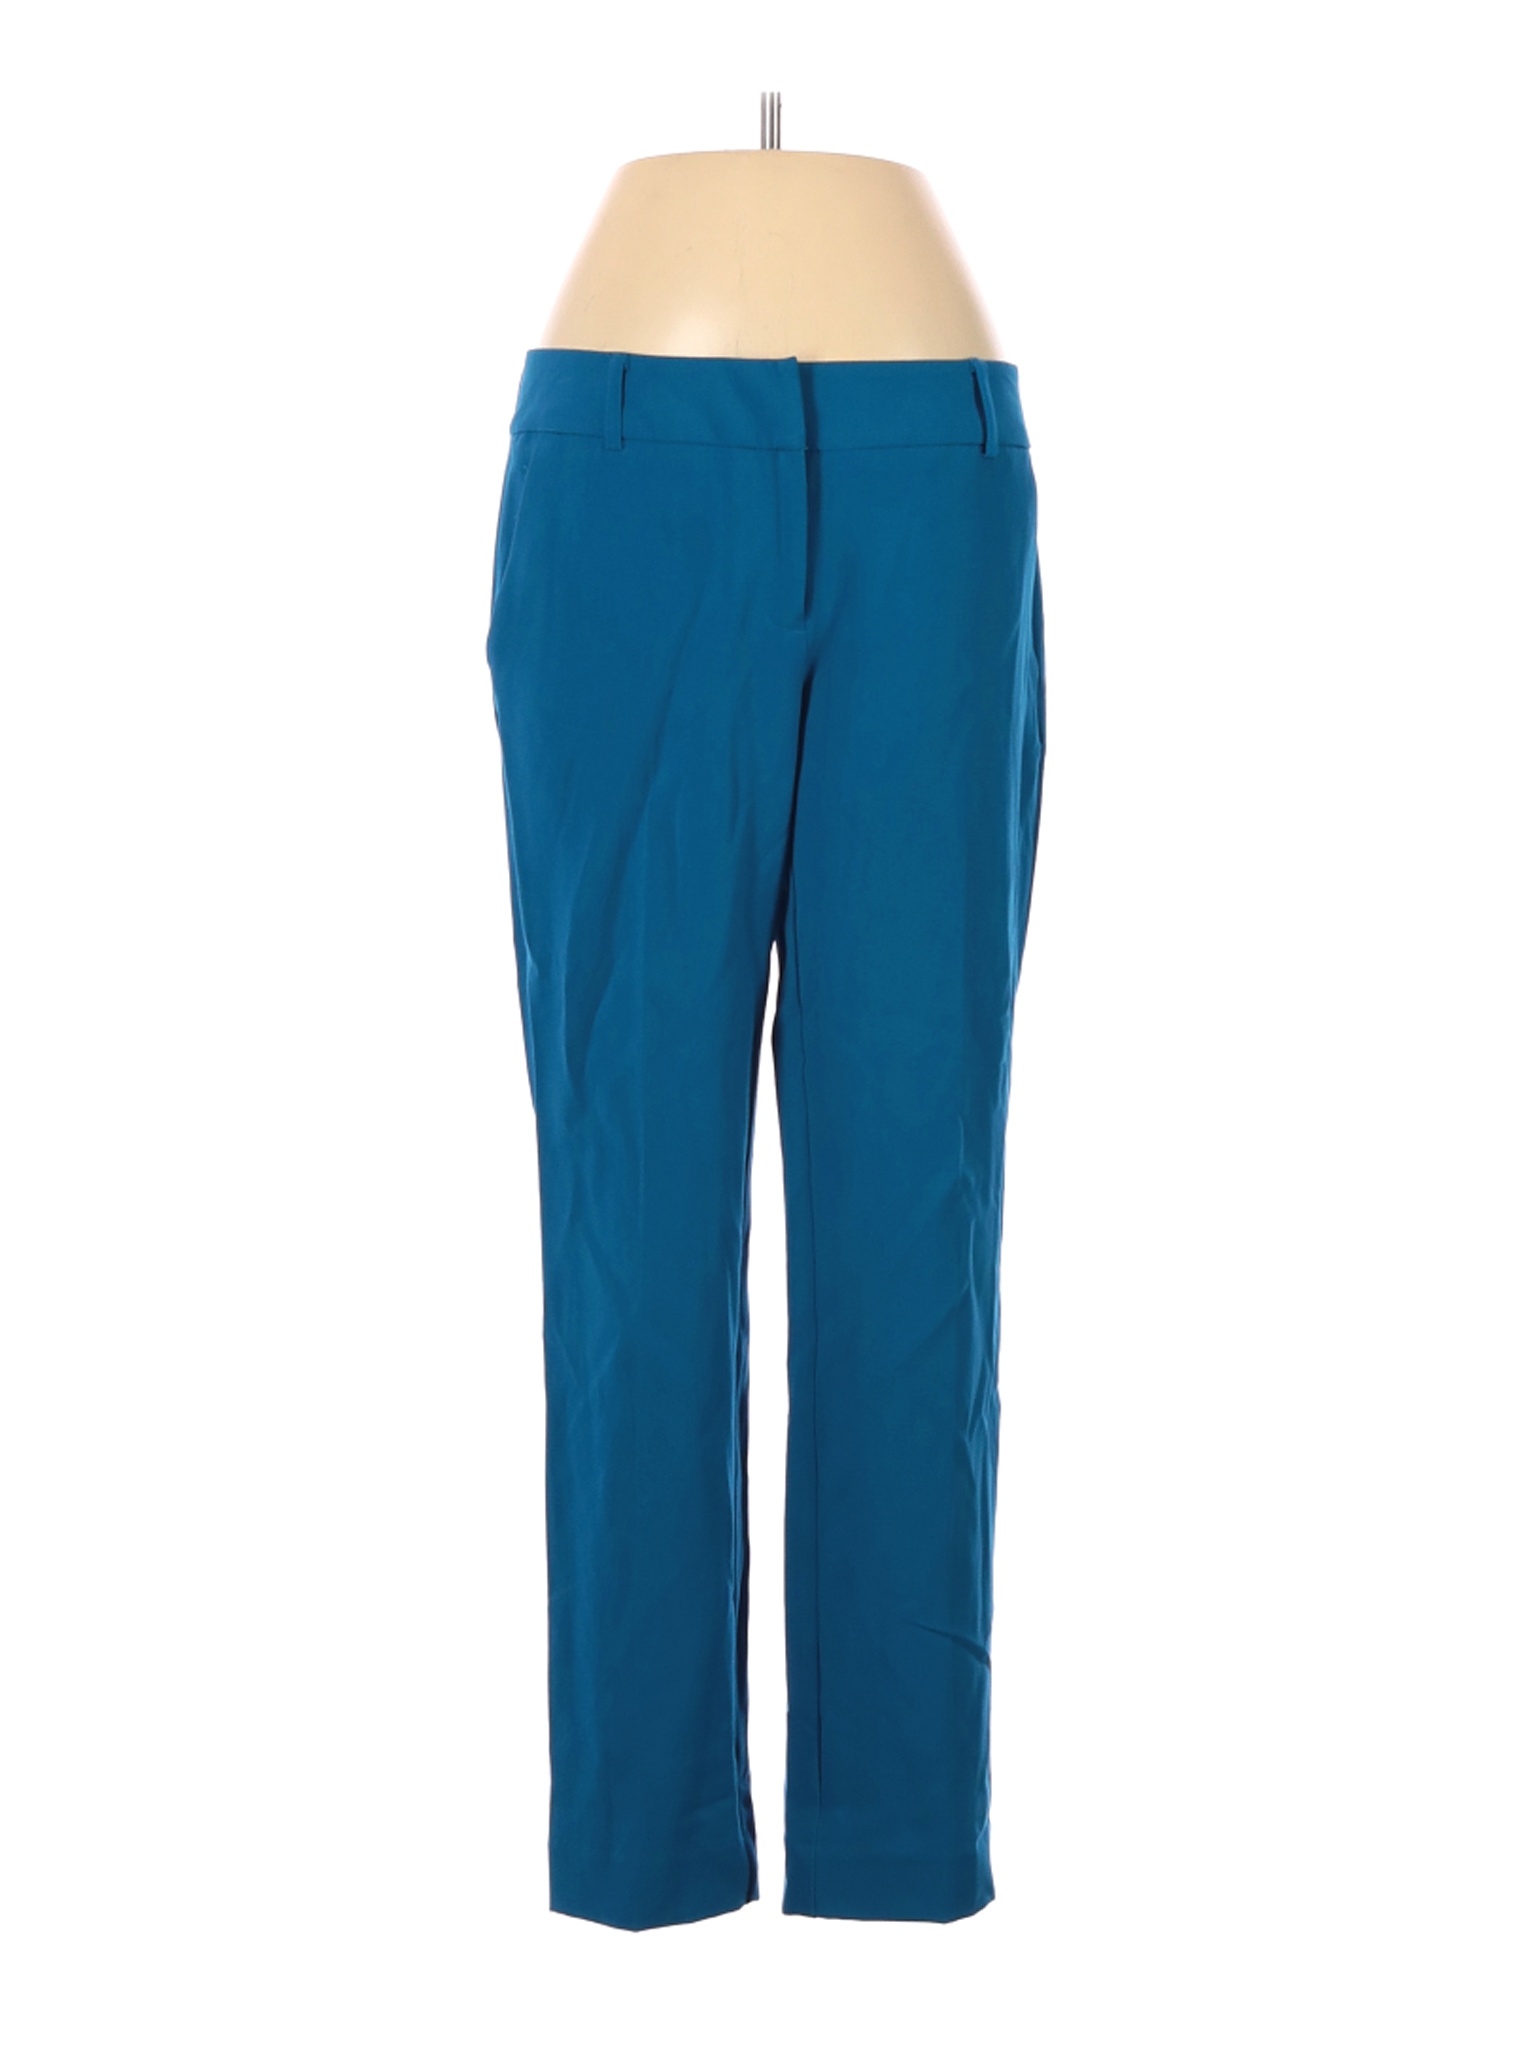 New York & Company Women Green Dress Pants 2 | eBay